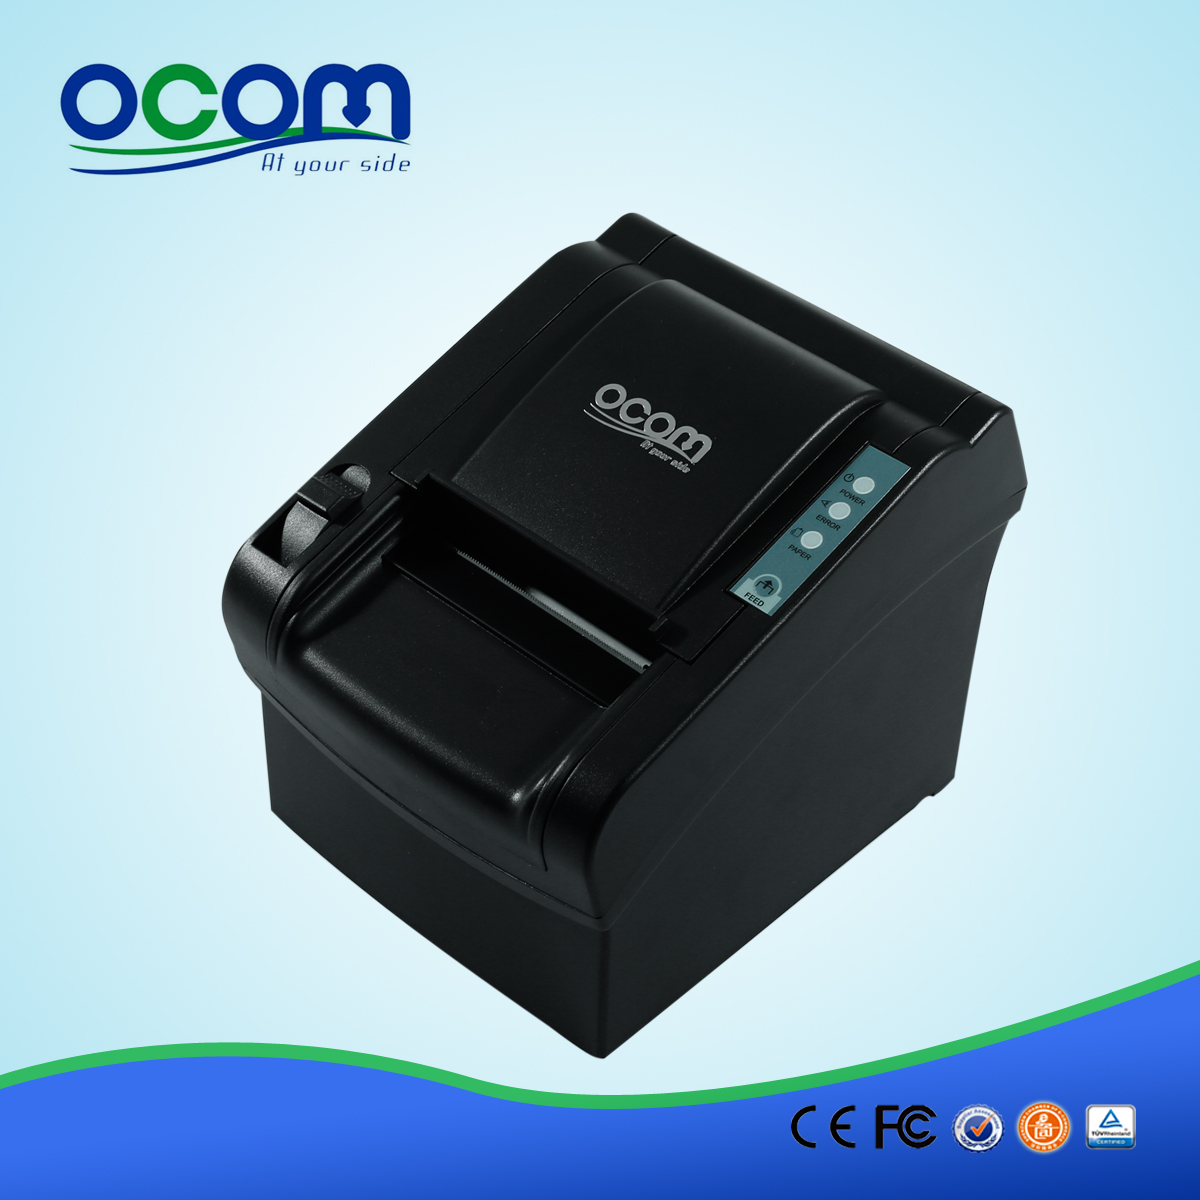 OCPP-802: levering goedkope thermische printer module, thermische printer prijs in India